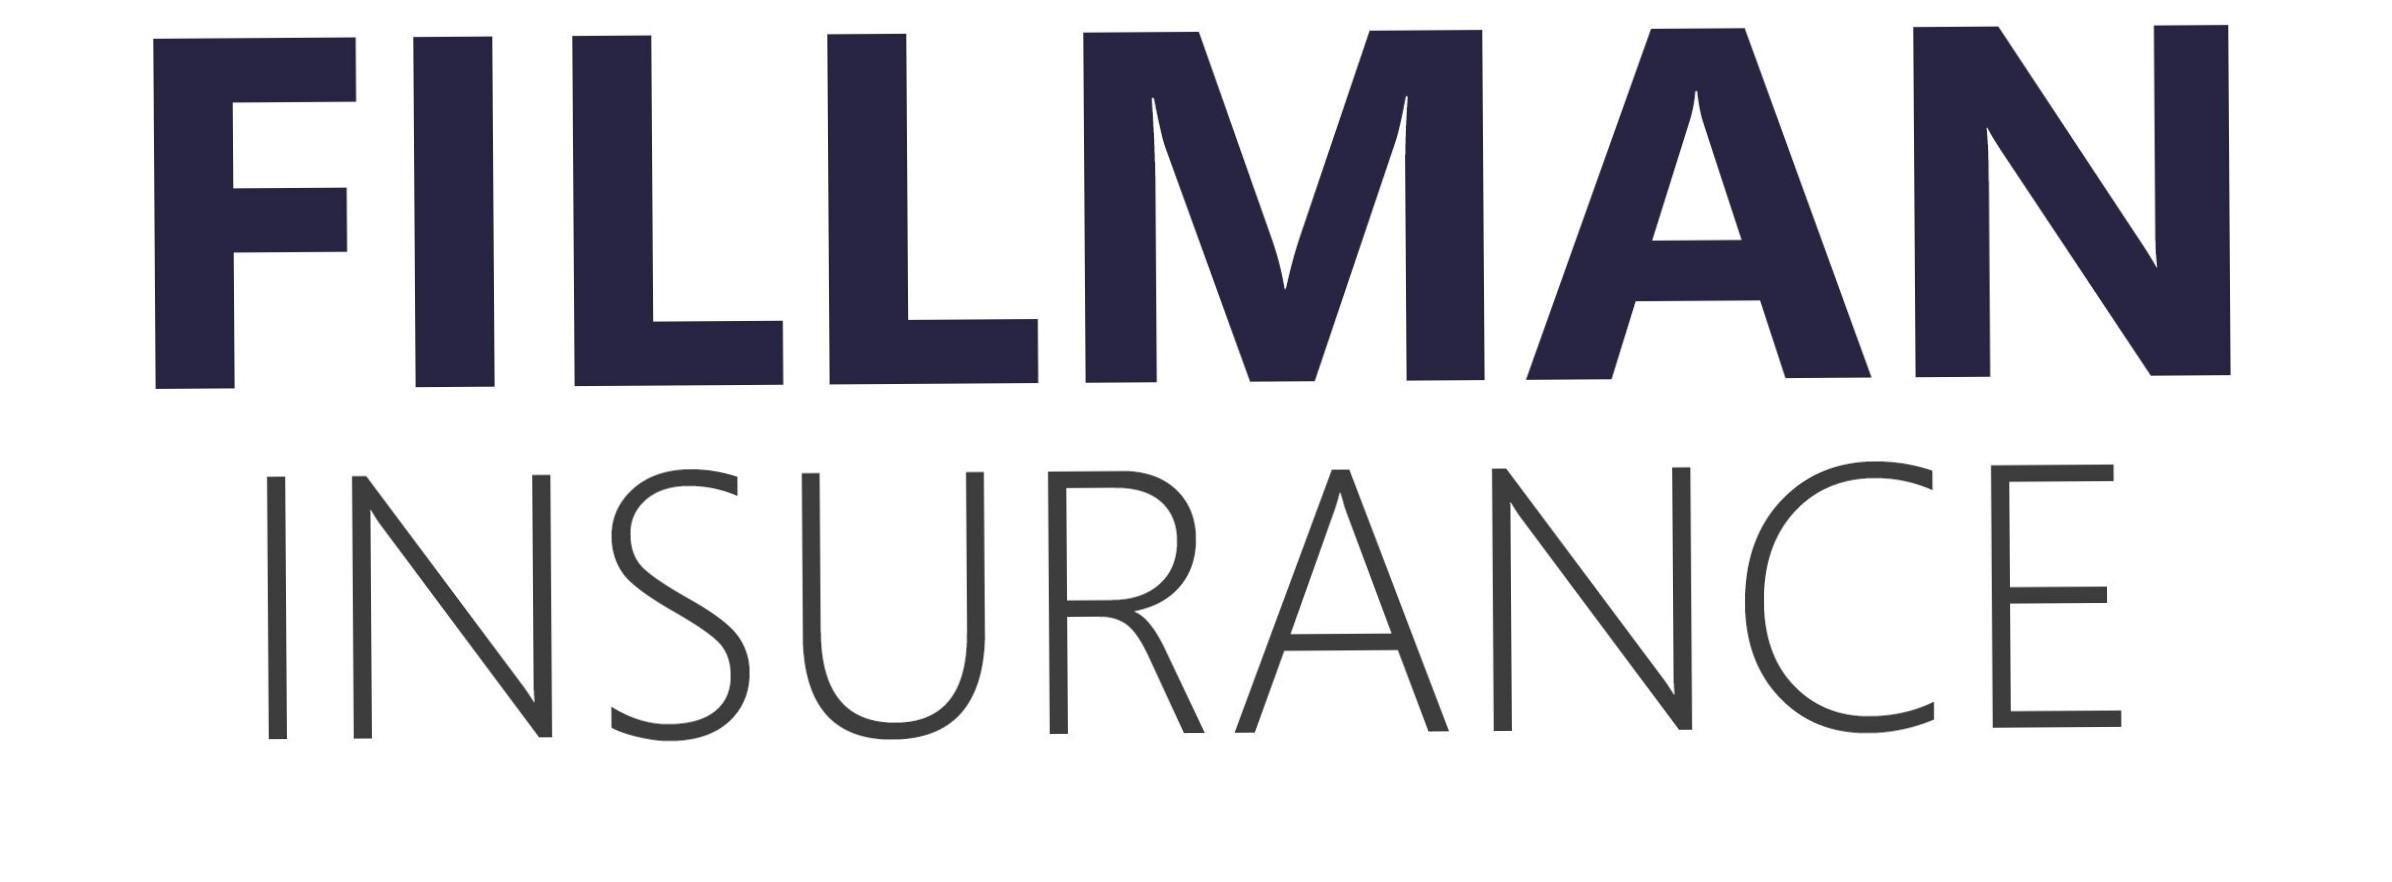 Fillman Insurance Agency's Logo